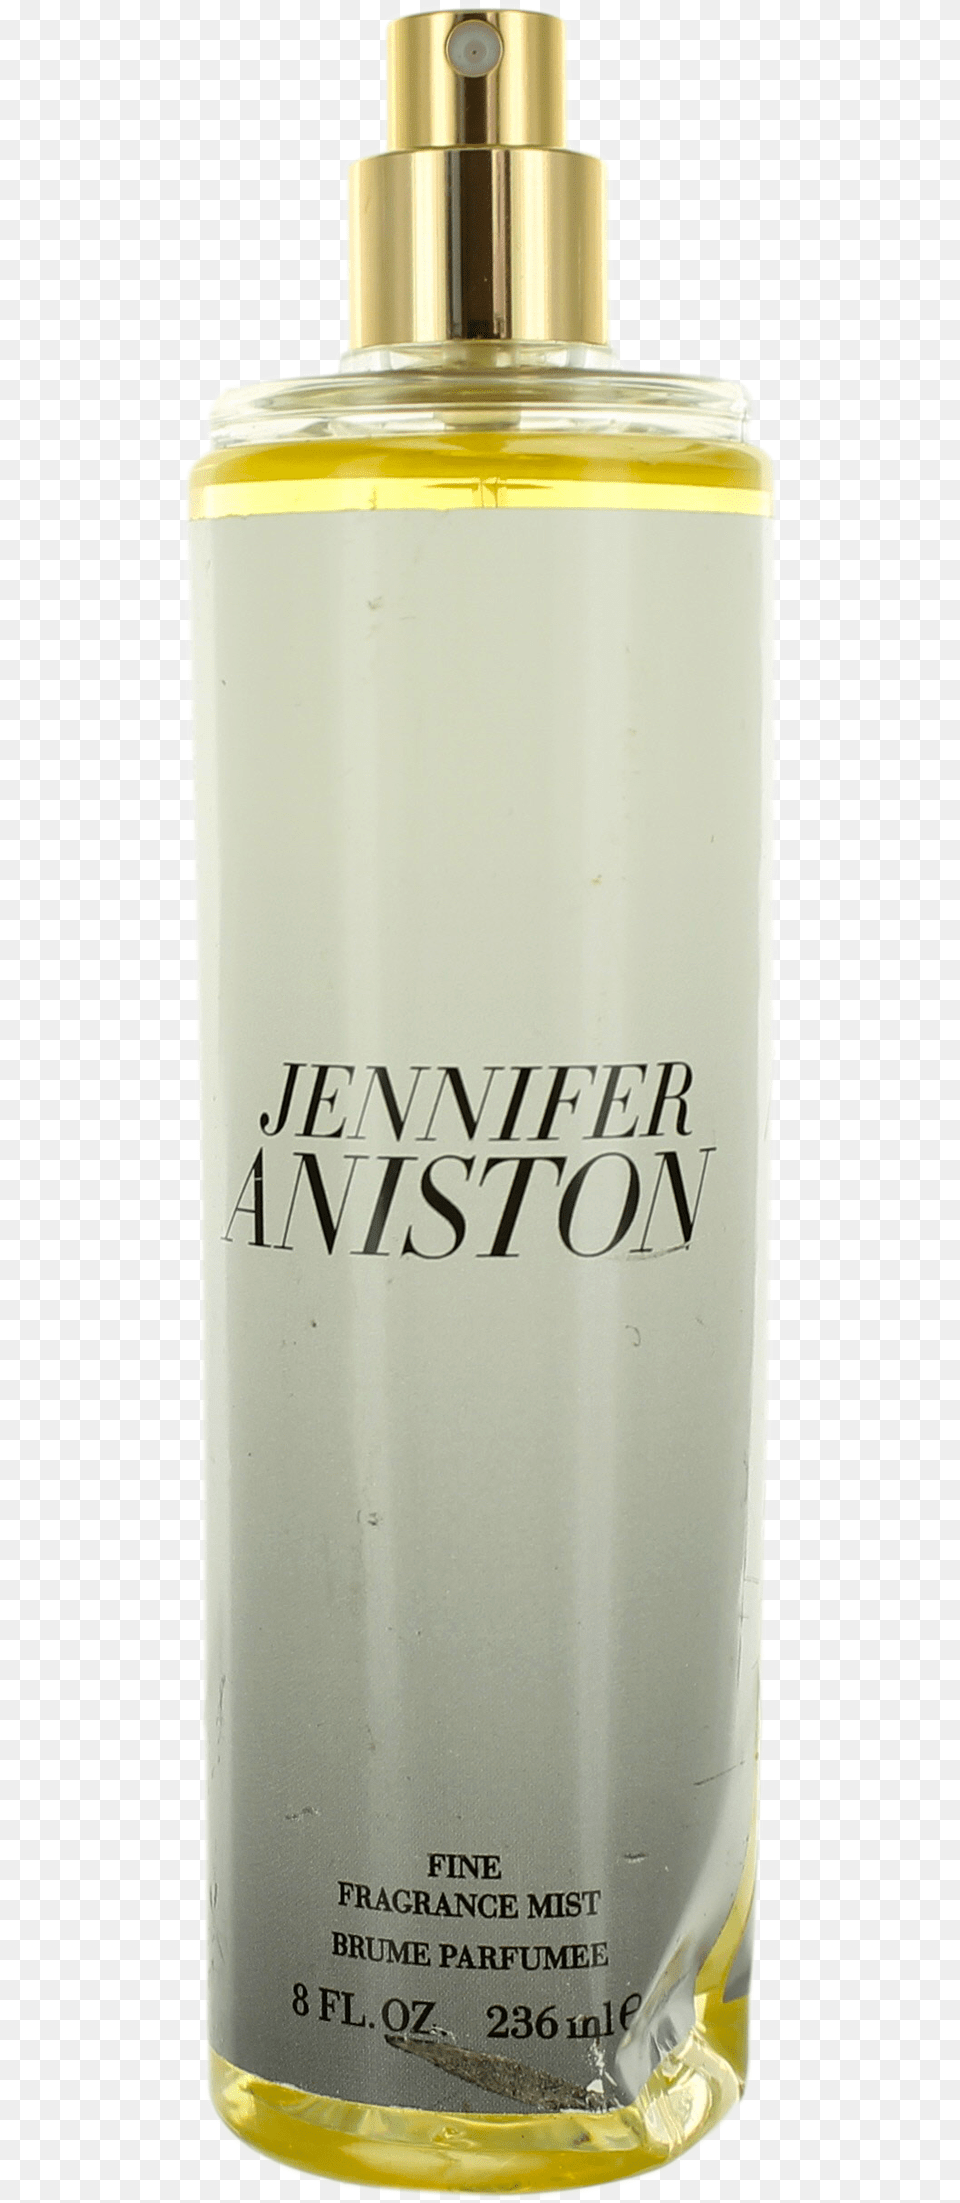 Jennifer Aniston By Jennifer Aniston For Women Body Signage, Bottle, Cosmetics, Perfume Png Image